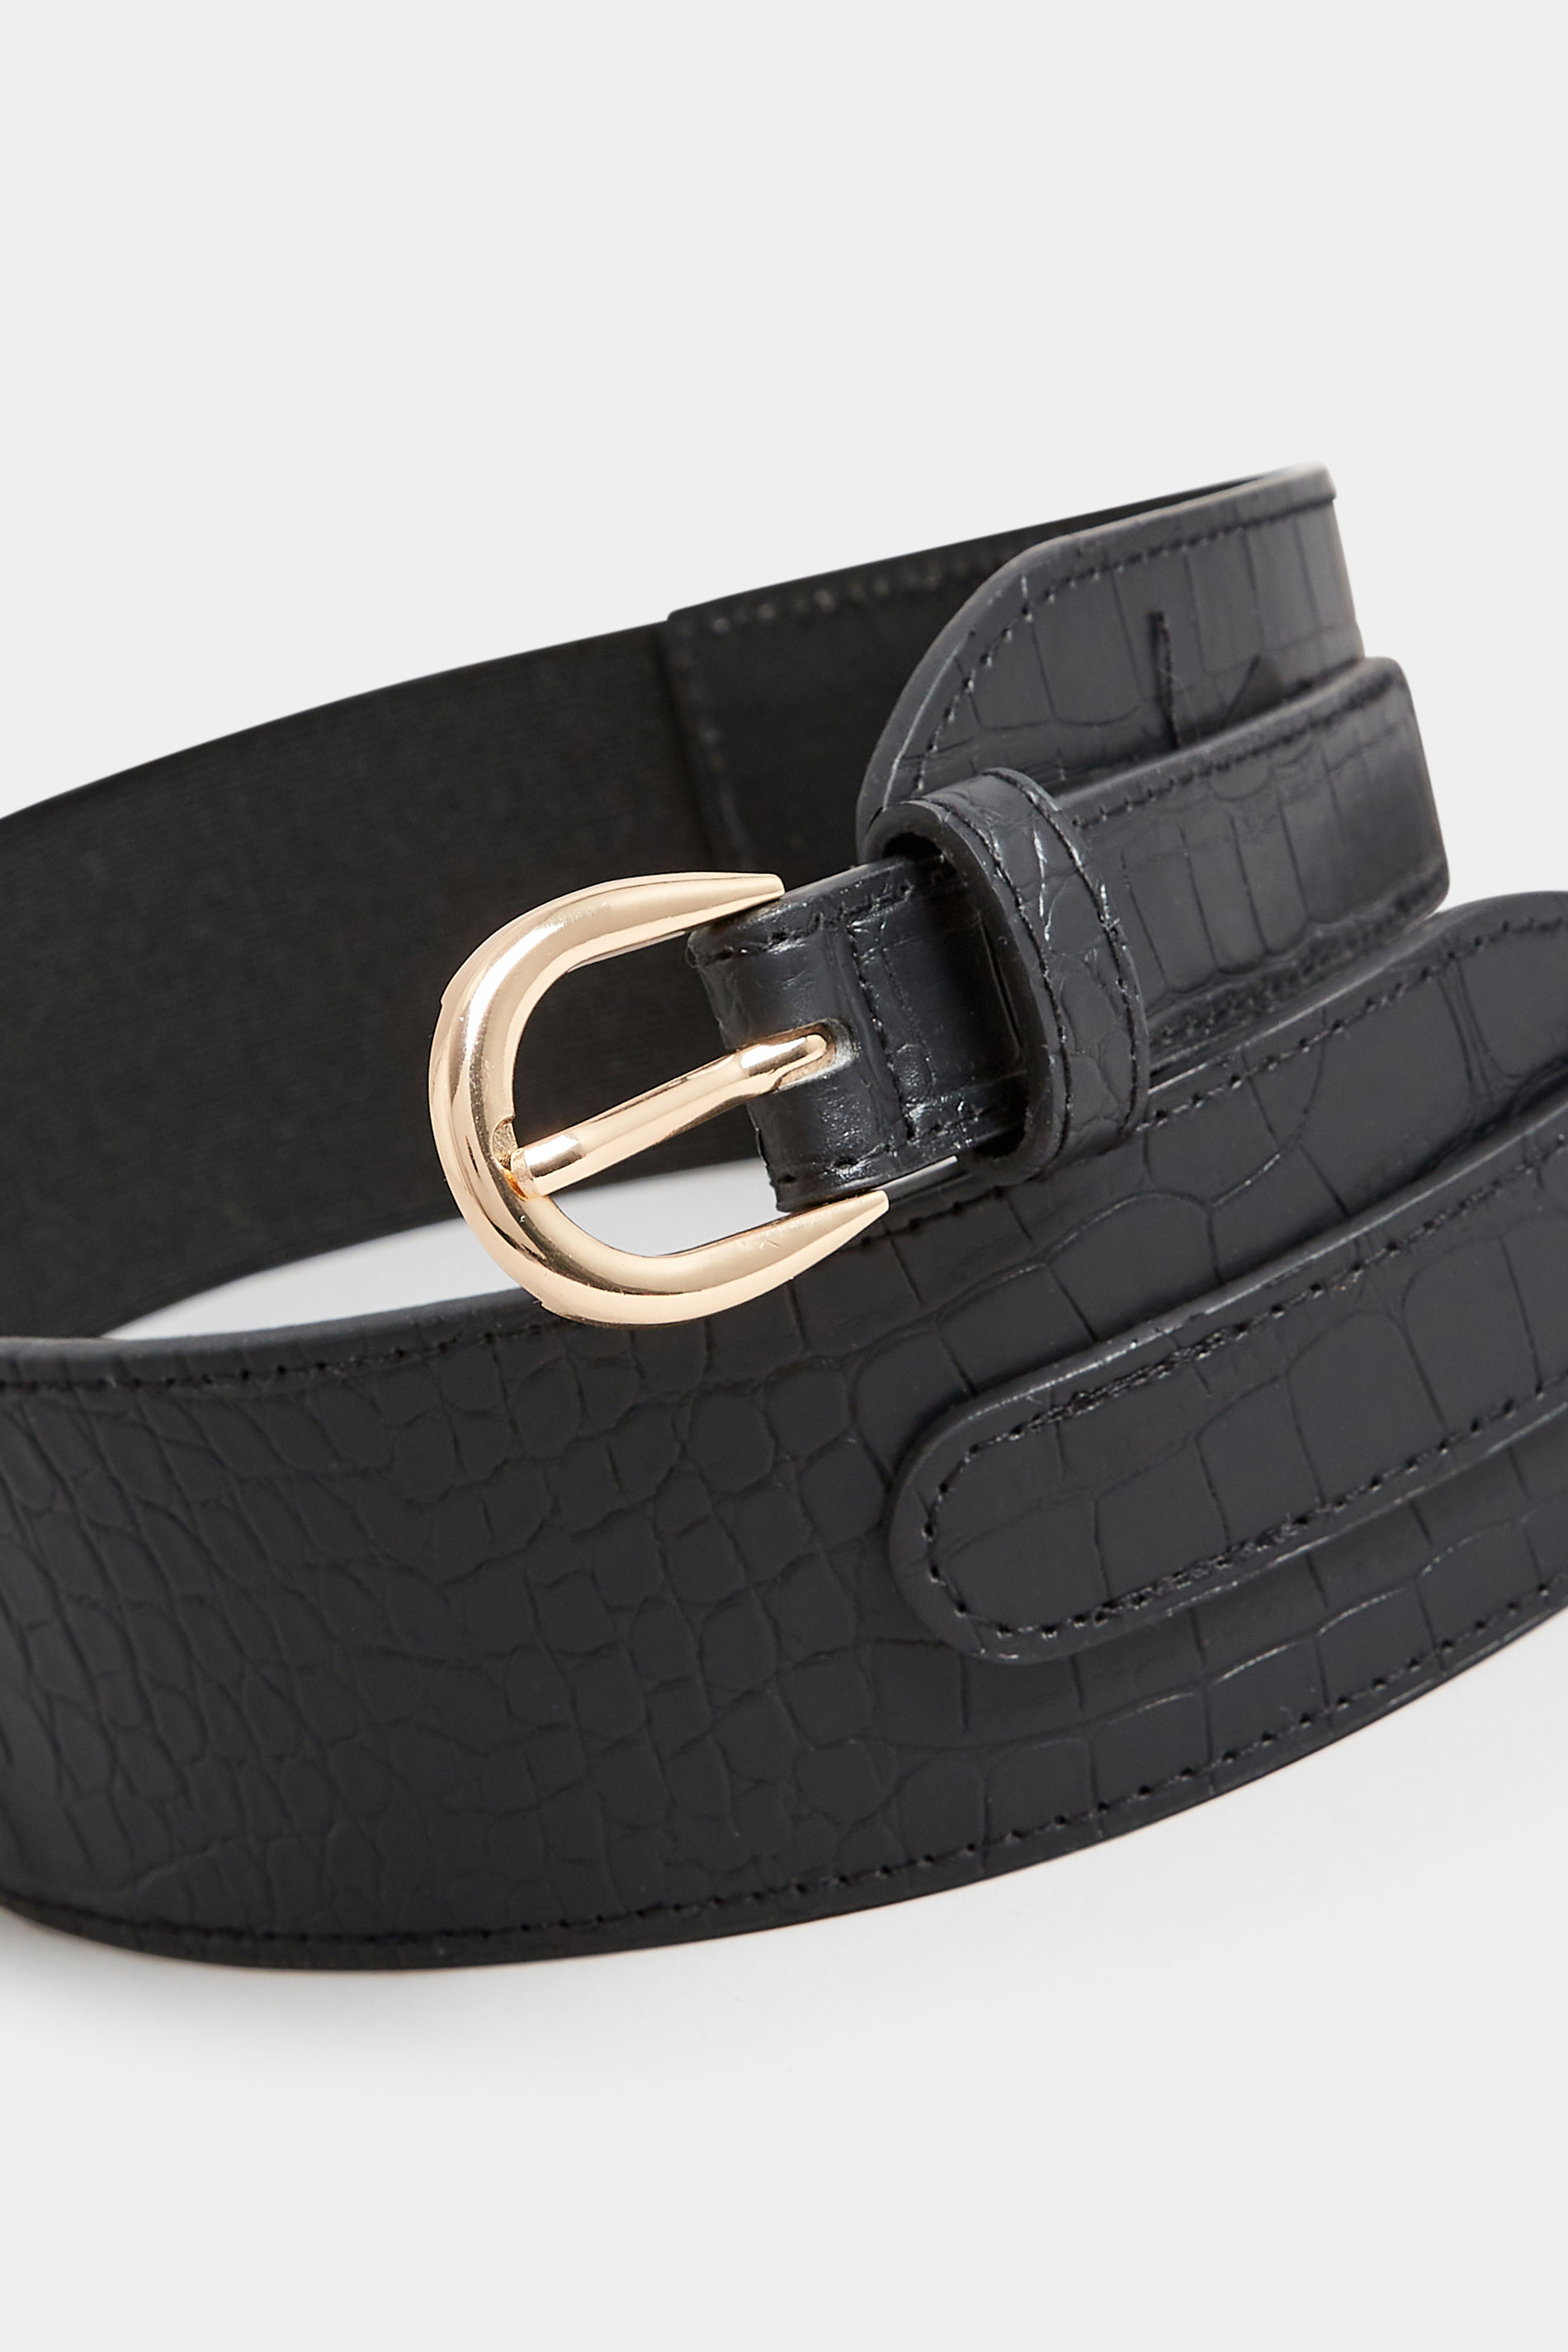 Black & Gold Croc Stretch Wide Belt | Yours Clothing 3